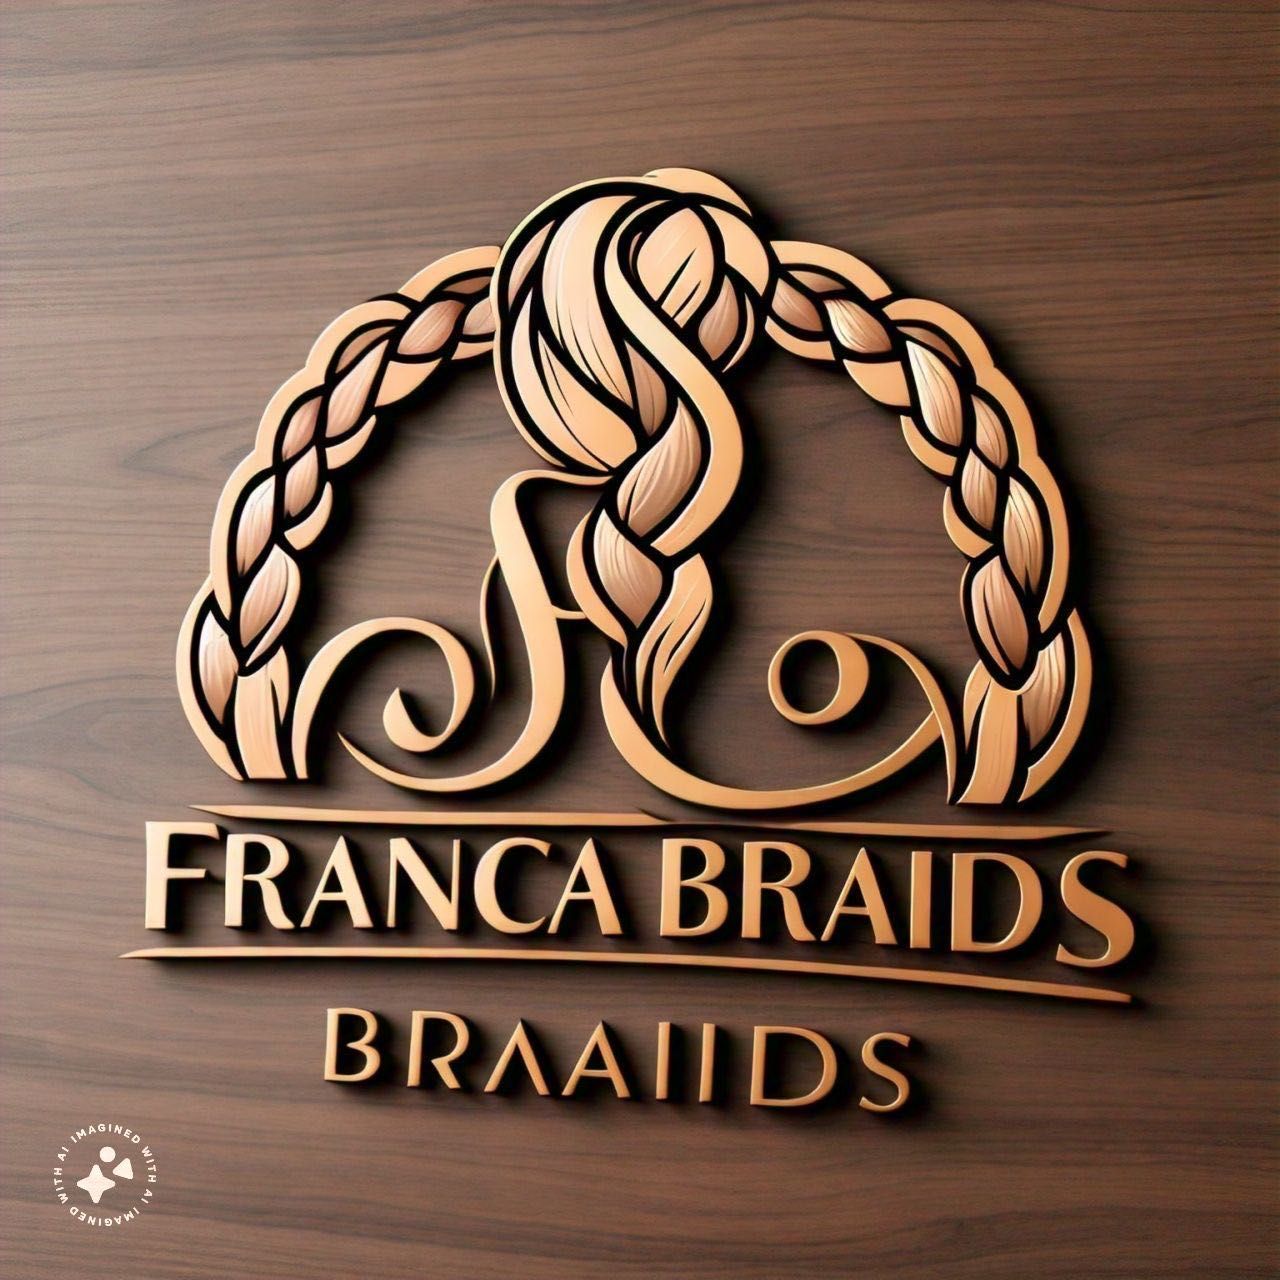 Franca braids, Houston, 77082